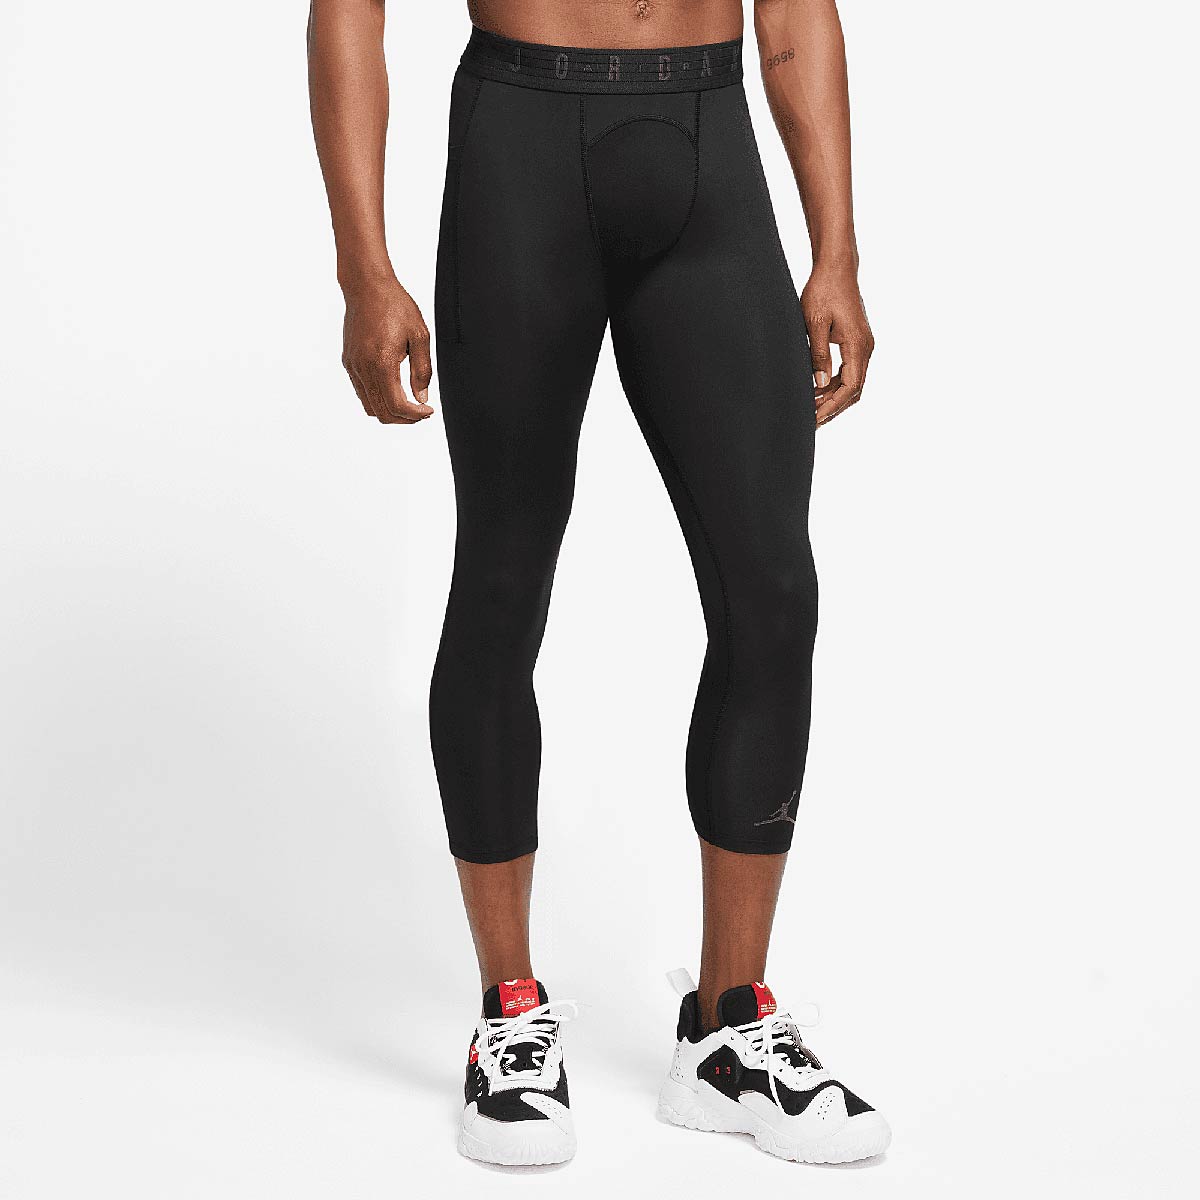 Nike Jordan Dominate Men's Tights